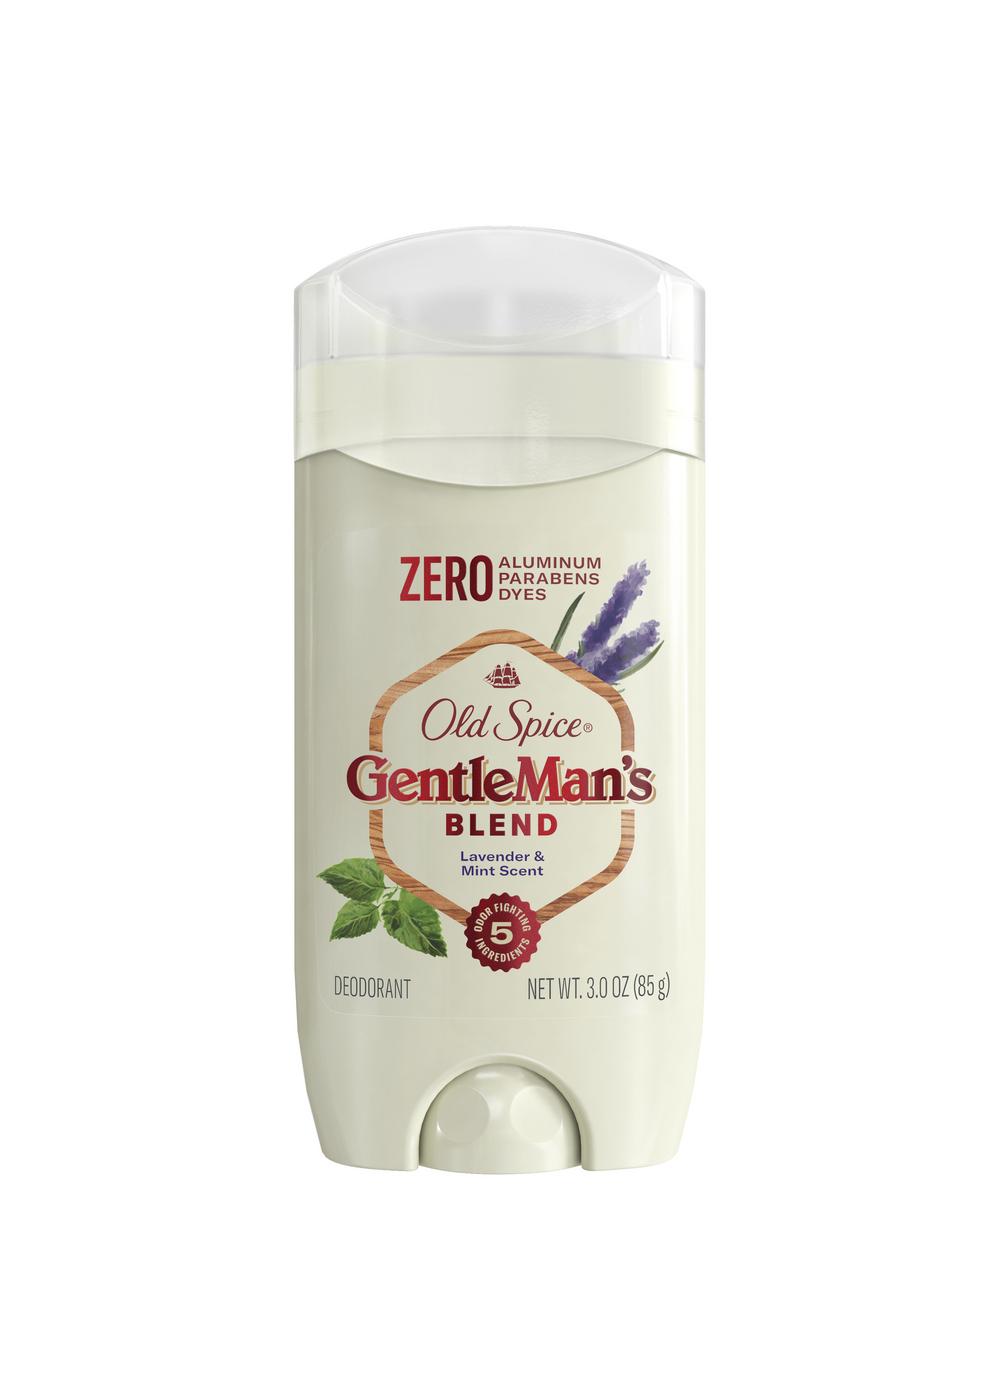 Old Spice Gentleman's Blend Deodorant - Lavender & Mint; image 1 of 9